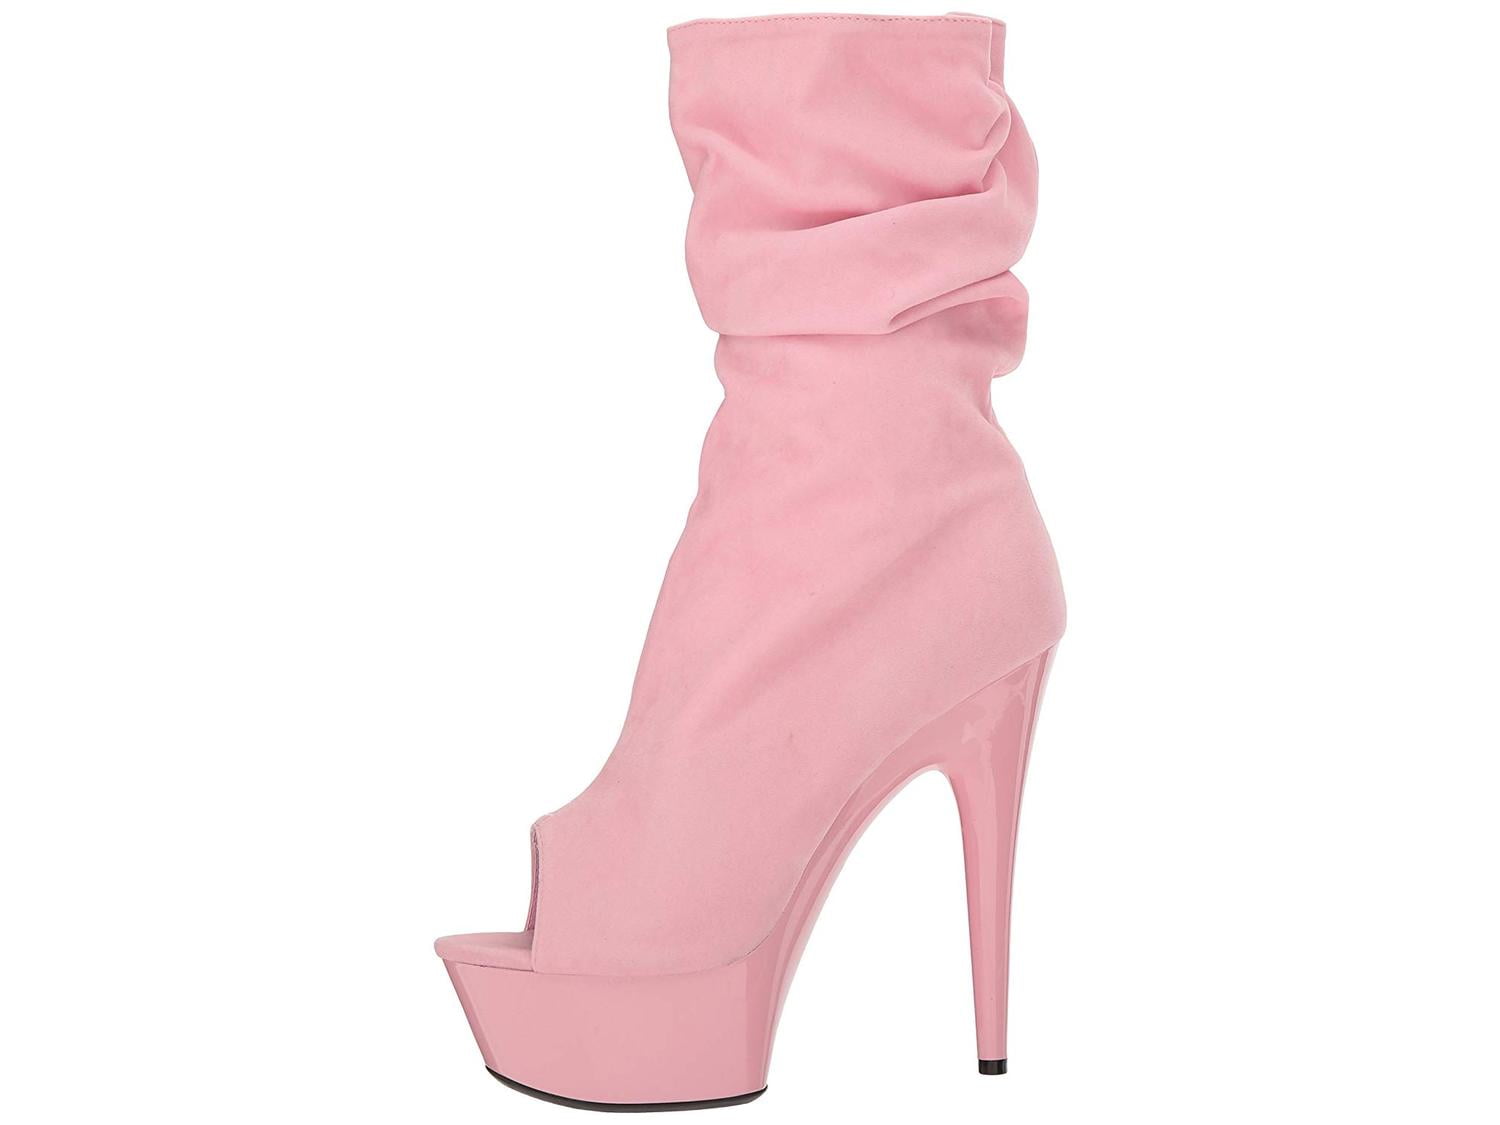 Ellie Shoes Womens 609-Scrunch Fabric Peep Toe Mid-Calf Fashion Boots